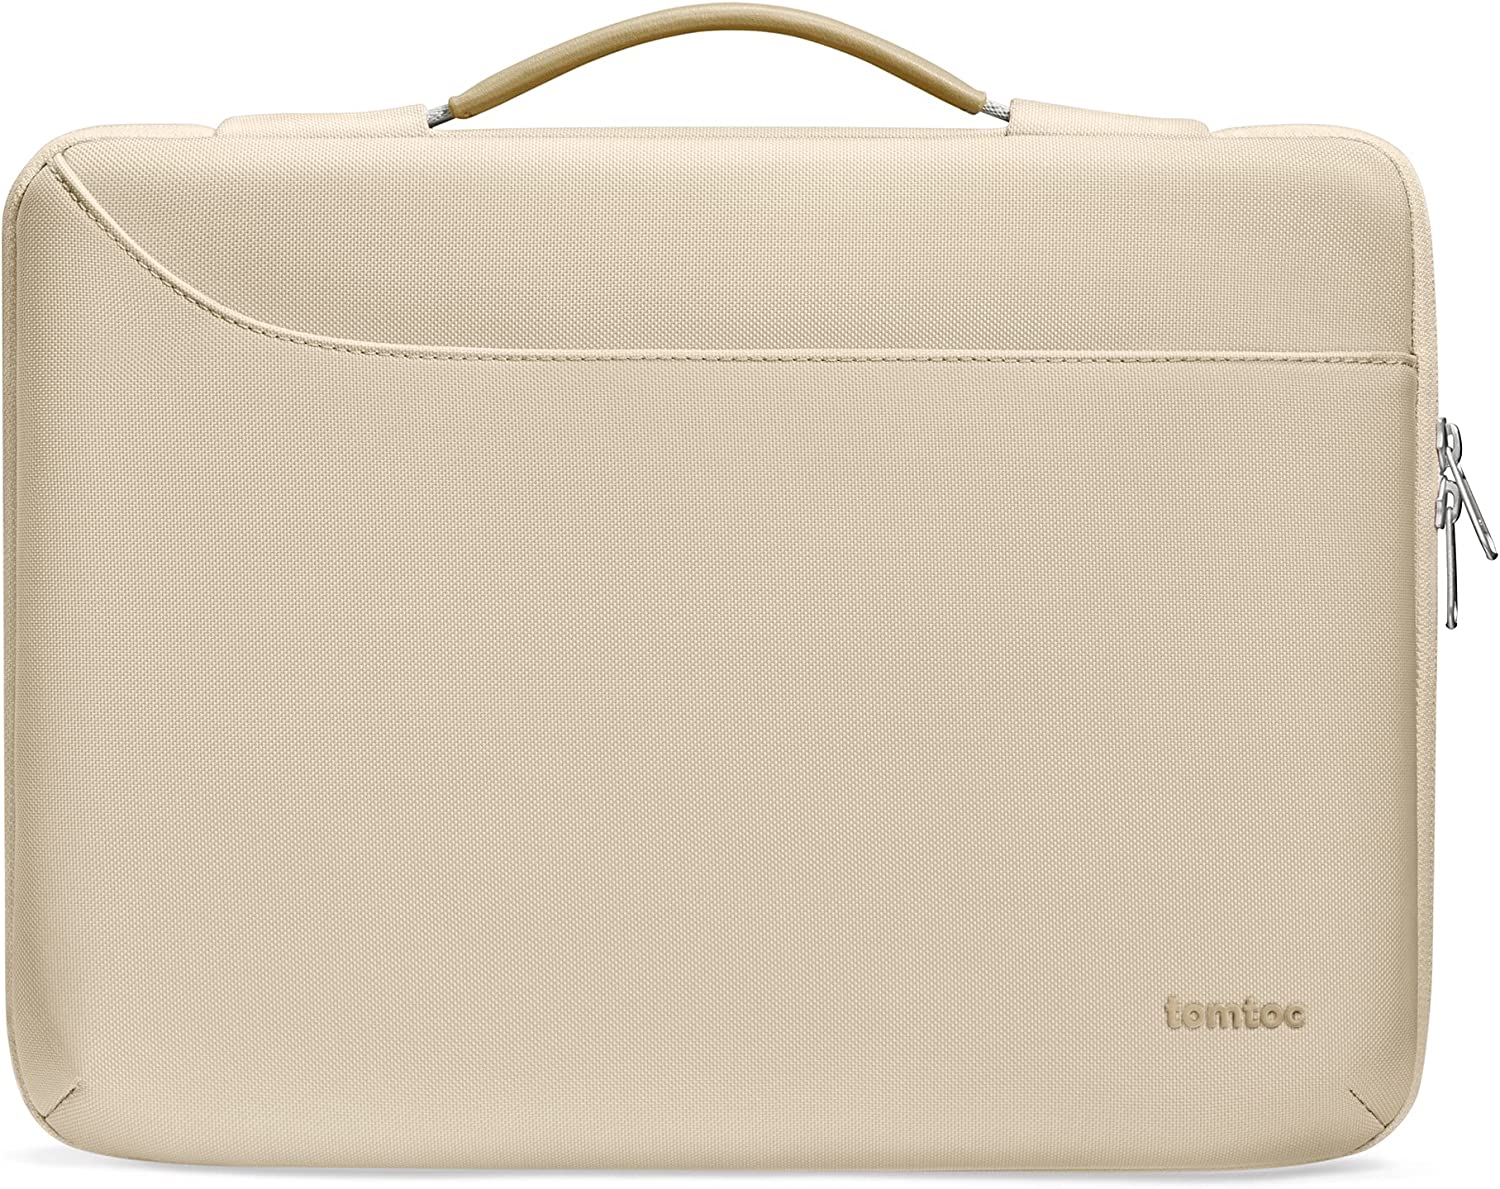 Tomtoc Defender-A22 Laptop Handbag 16 inch - Khaki